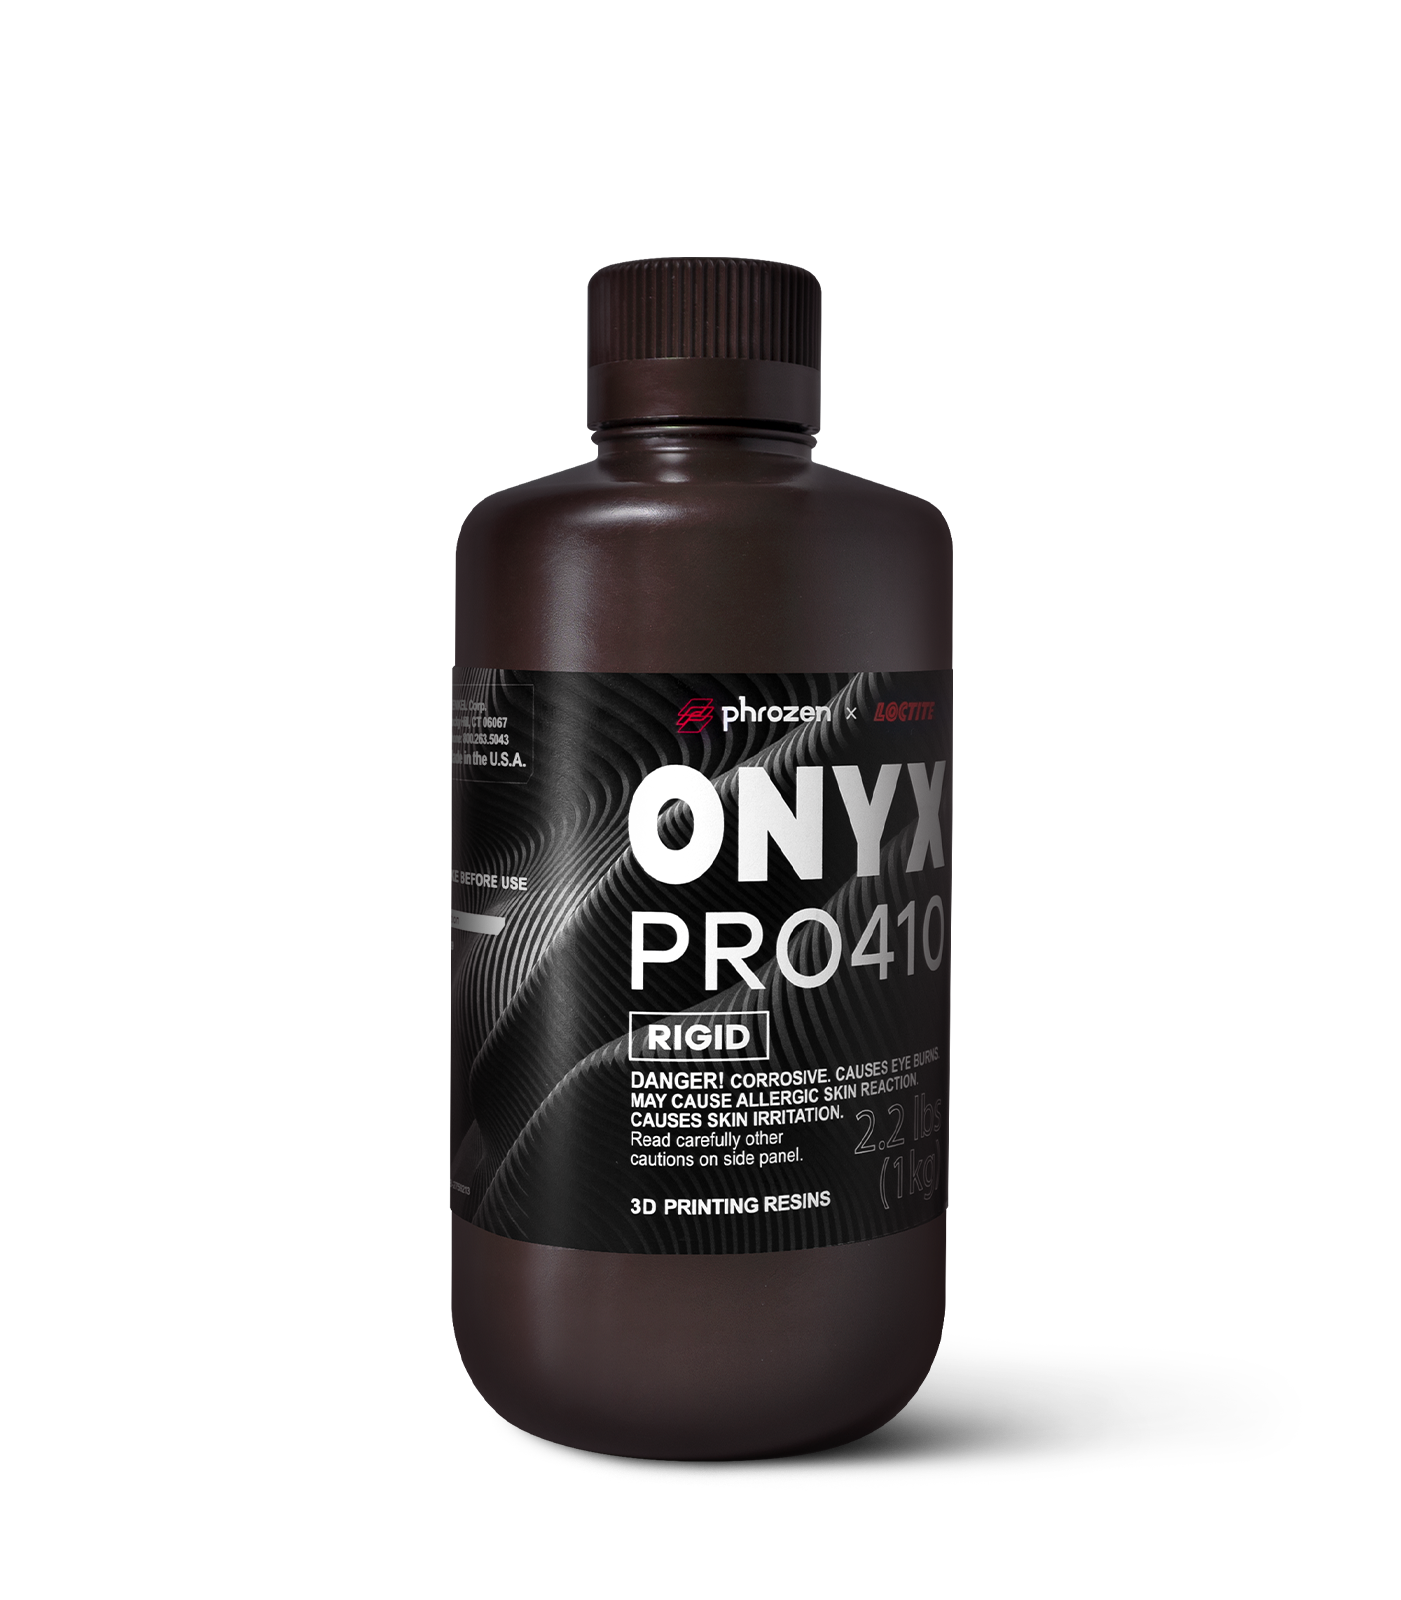 Onyx Rigid Pro410